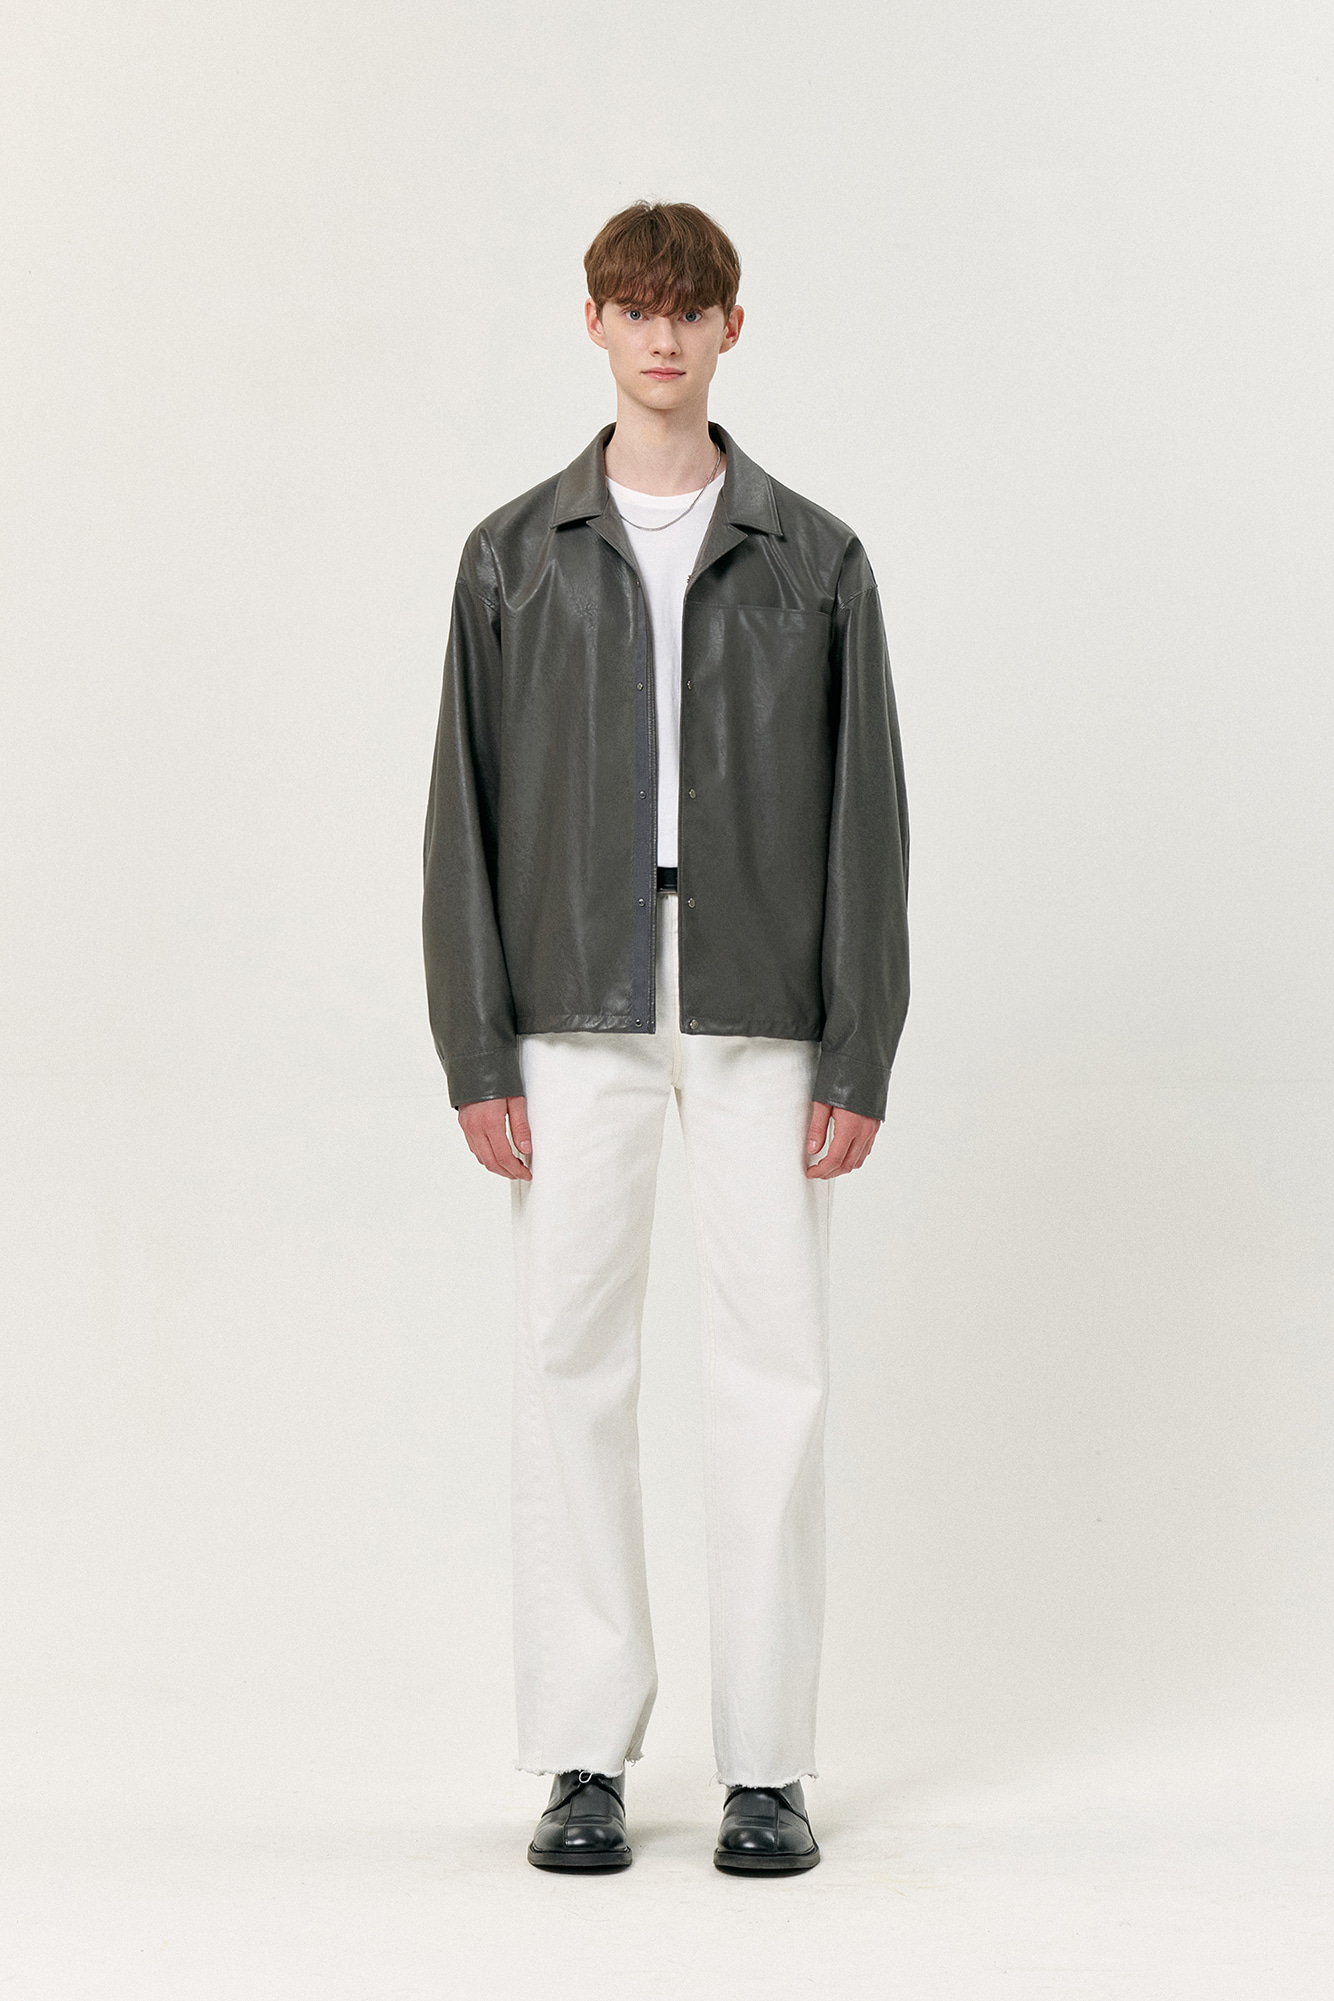 Overfit vegan leather shirt jacket (light gray)